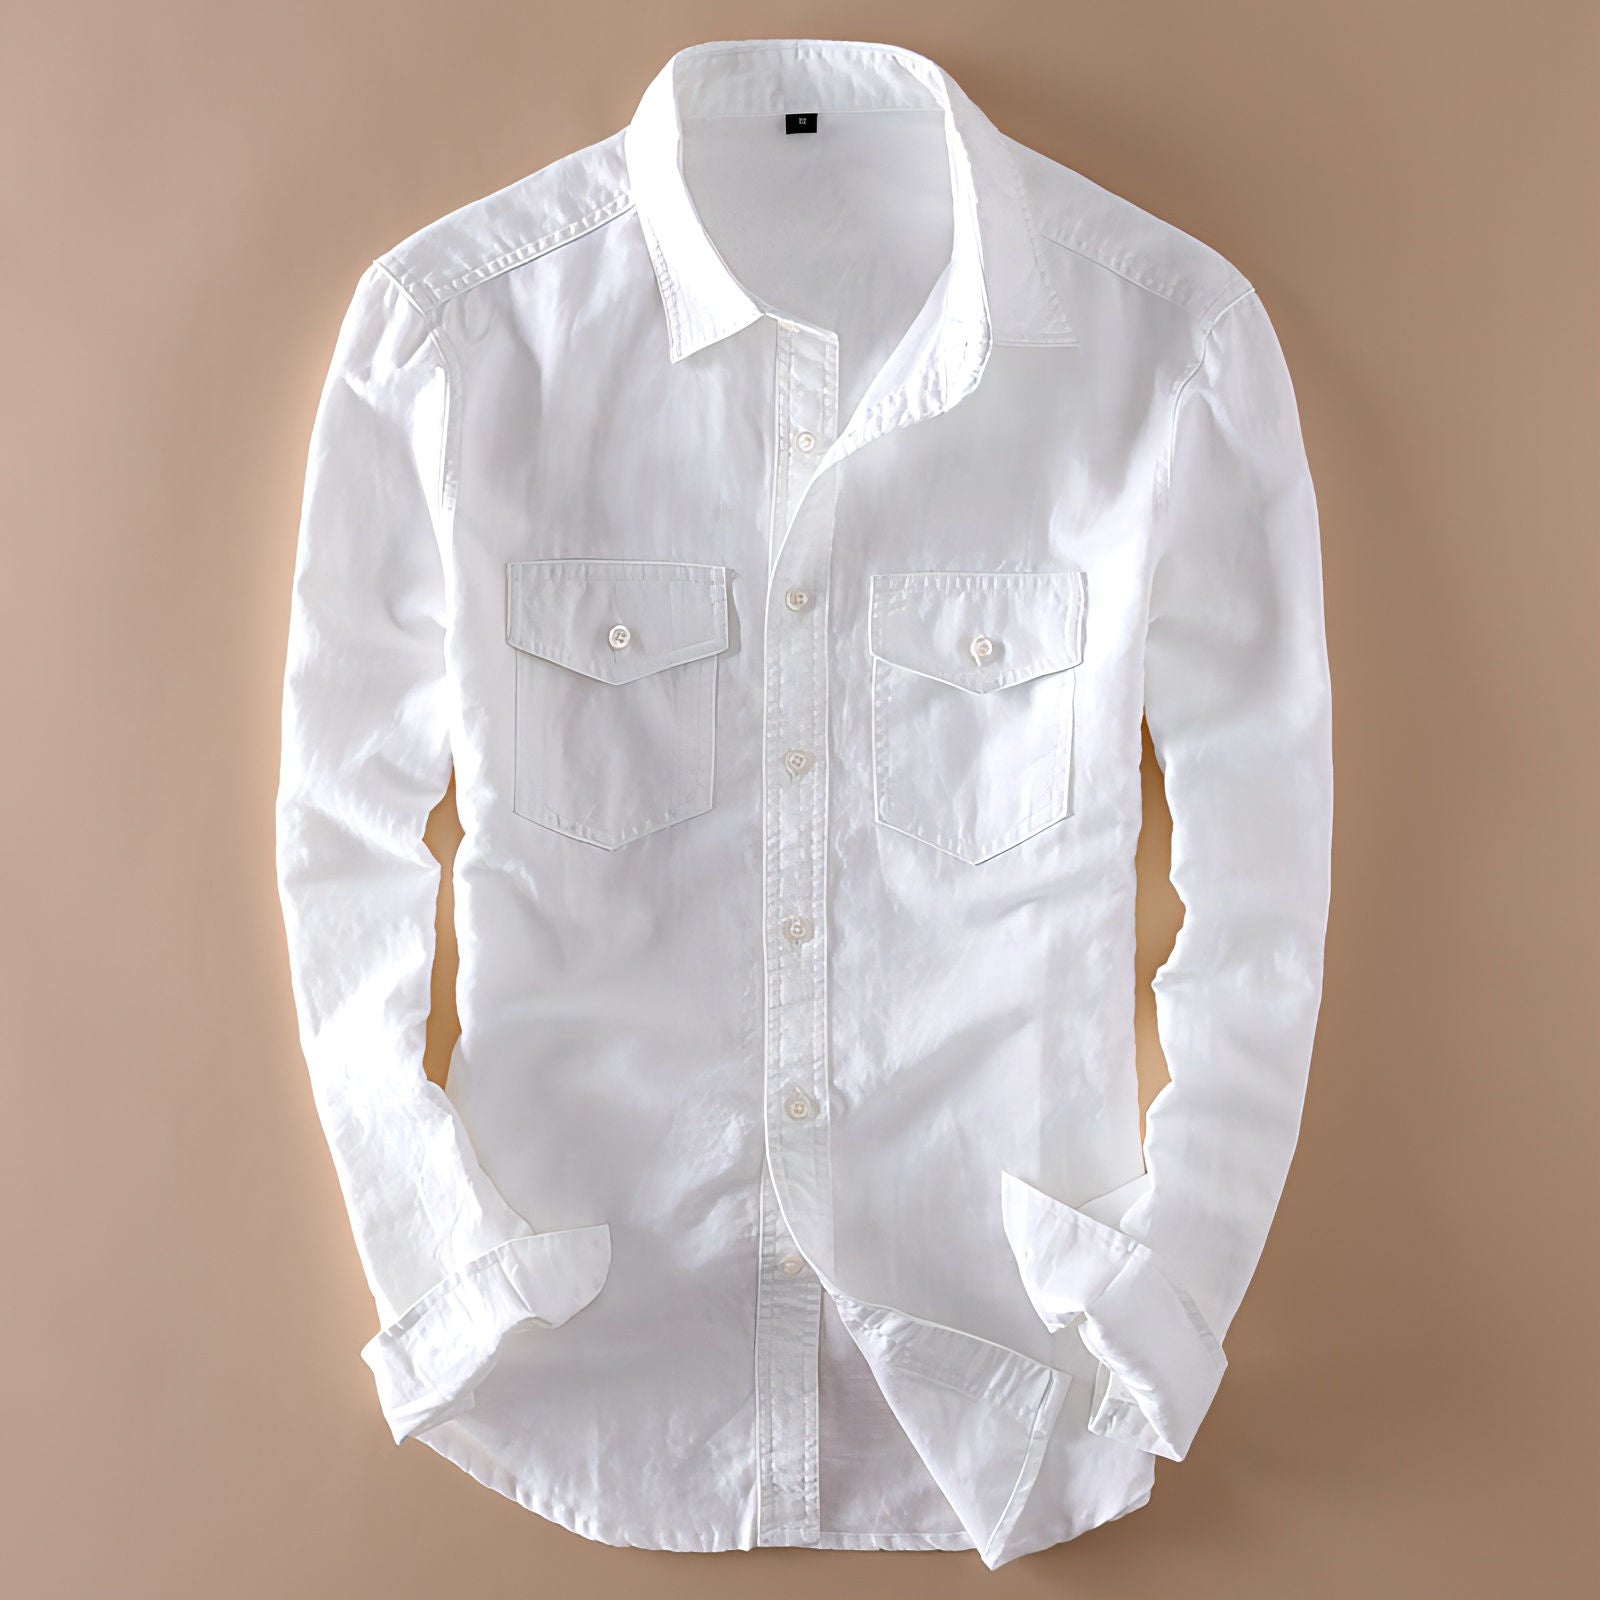 Buy MOGU Mens 3 Piece White Dress Suit Set US Size 35(Asian Size XL) White  at Amazon.in